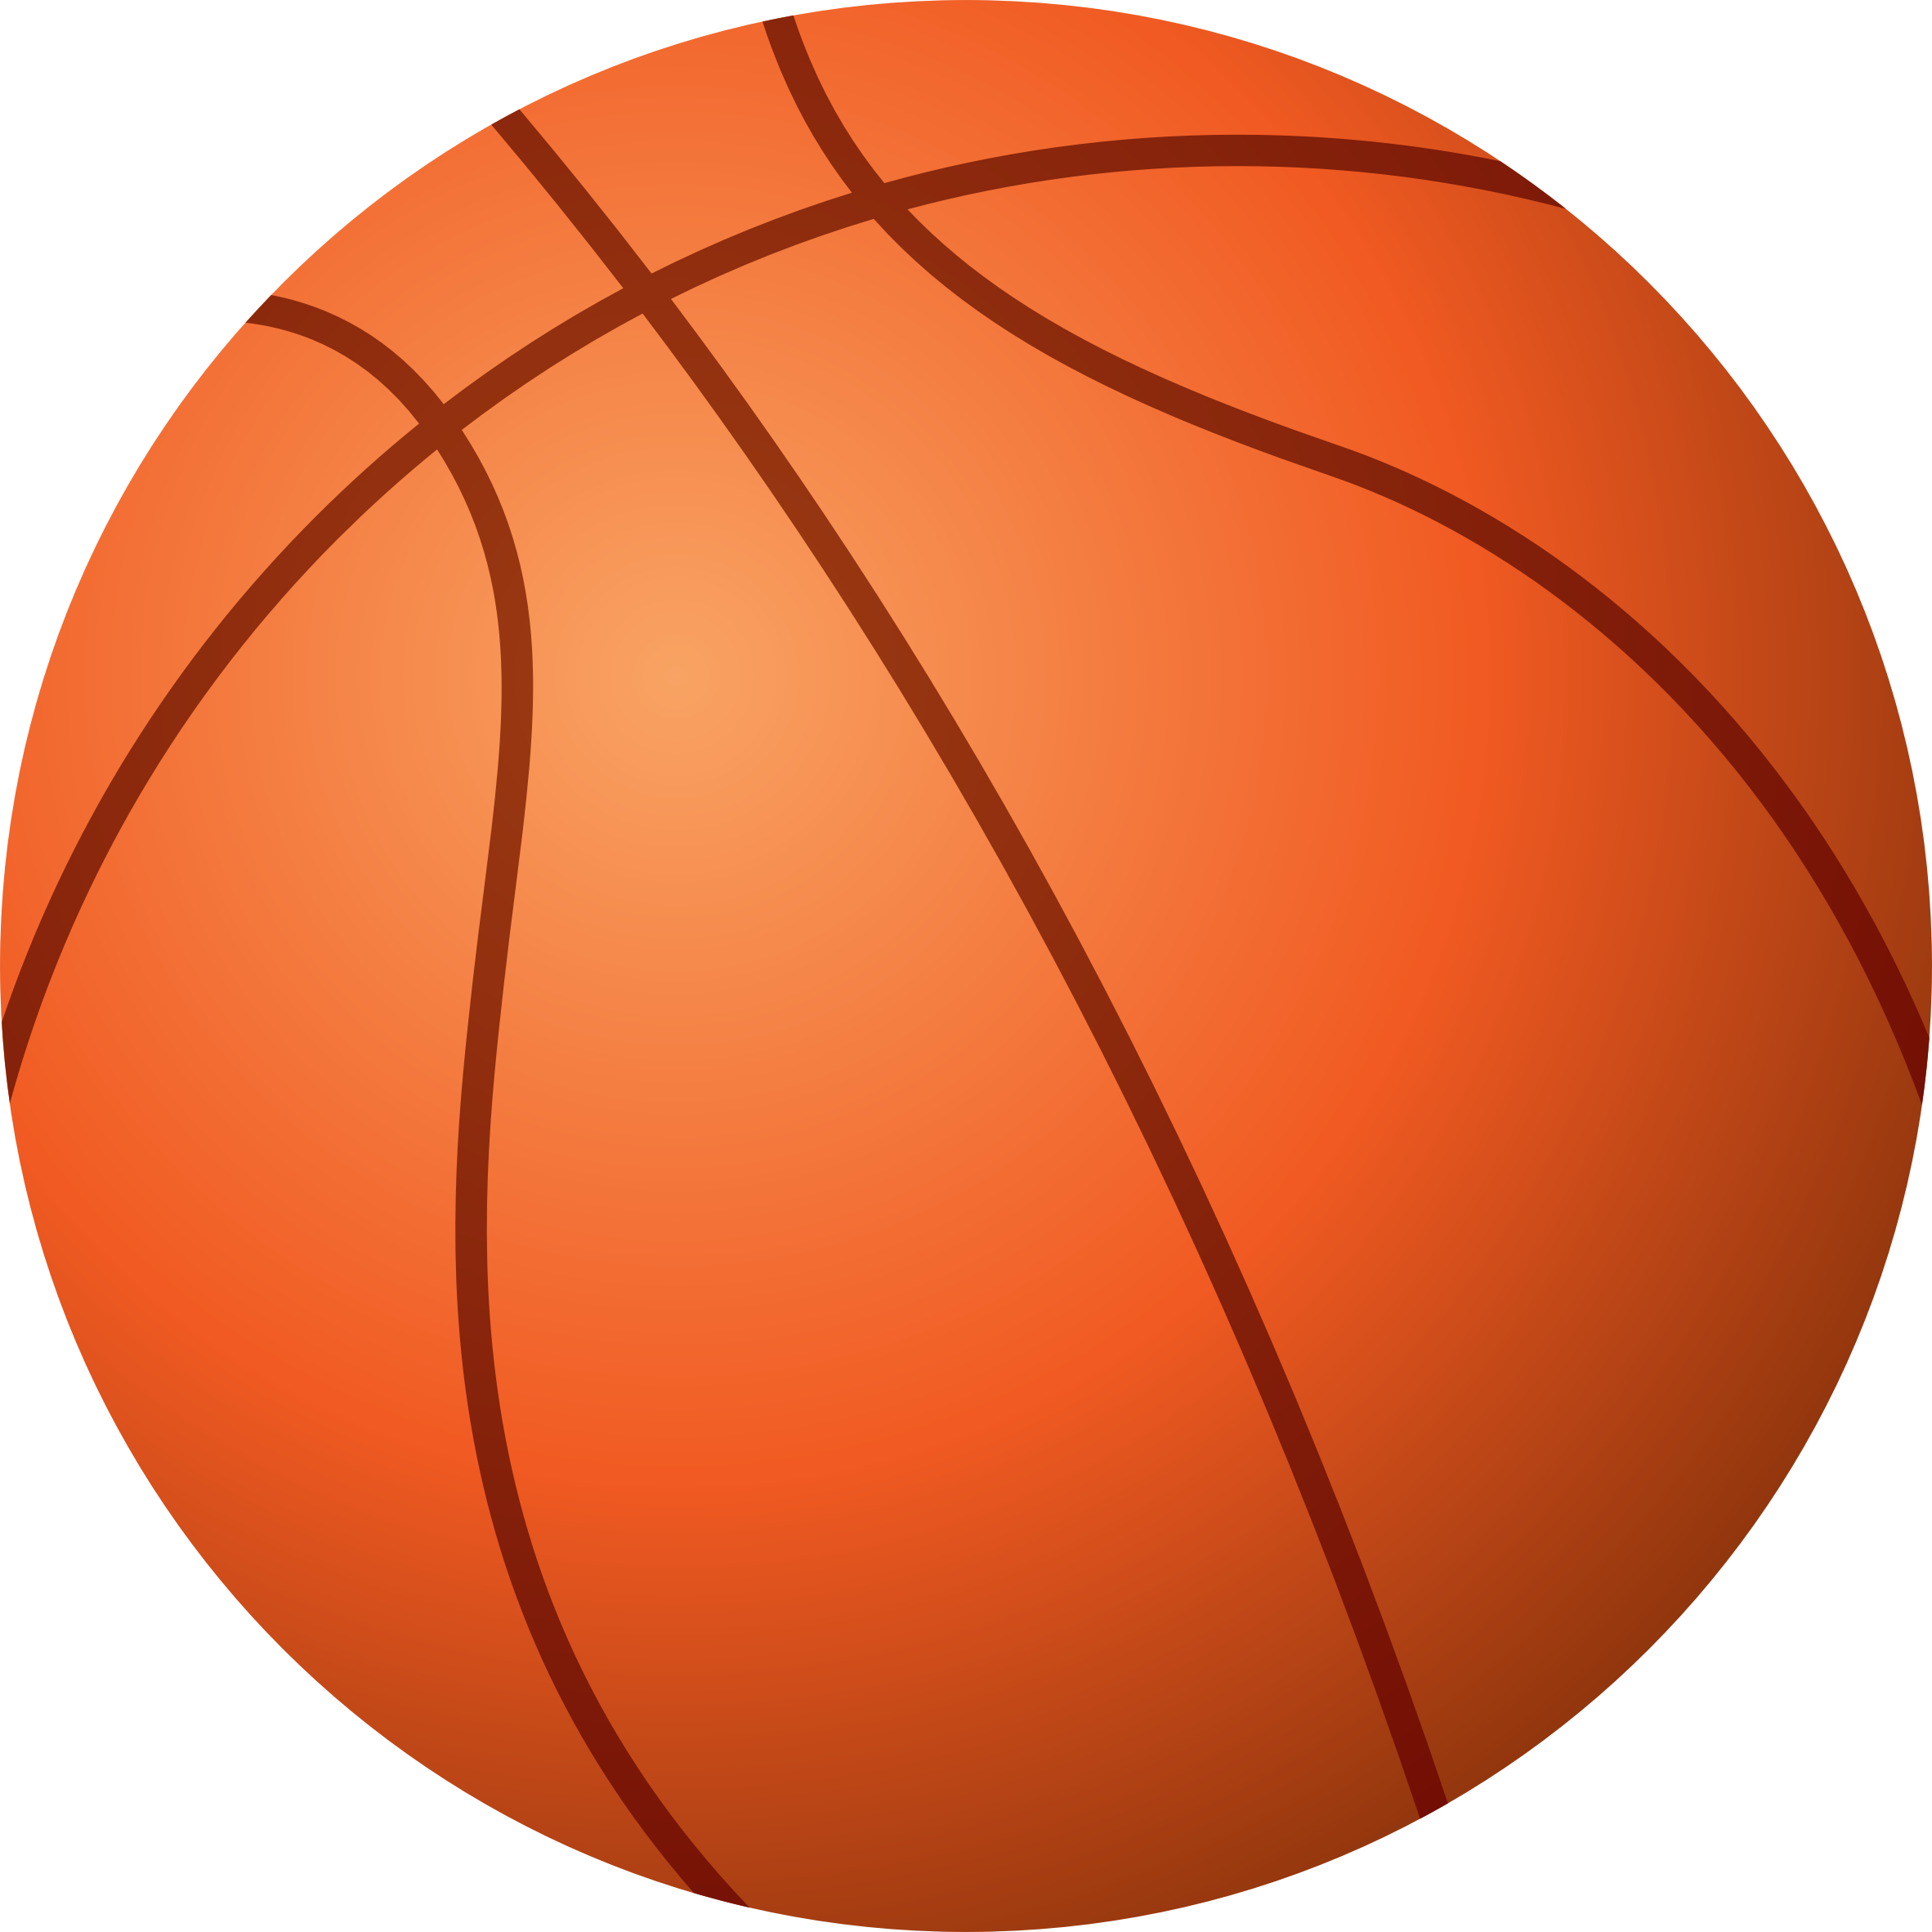 free vector basketball clipart - photo #6